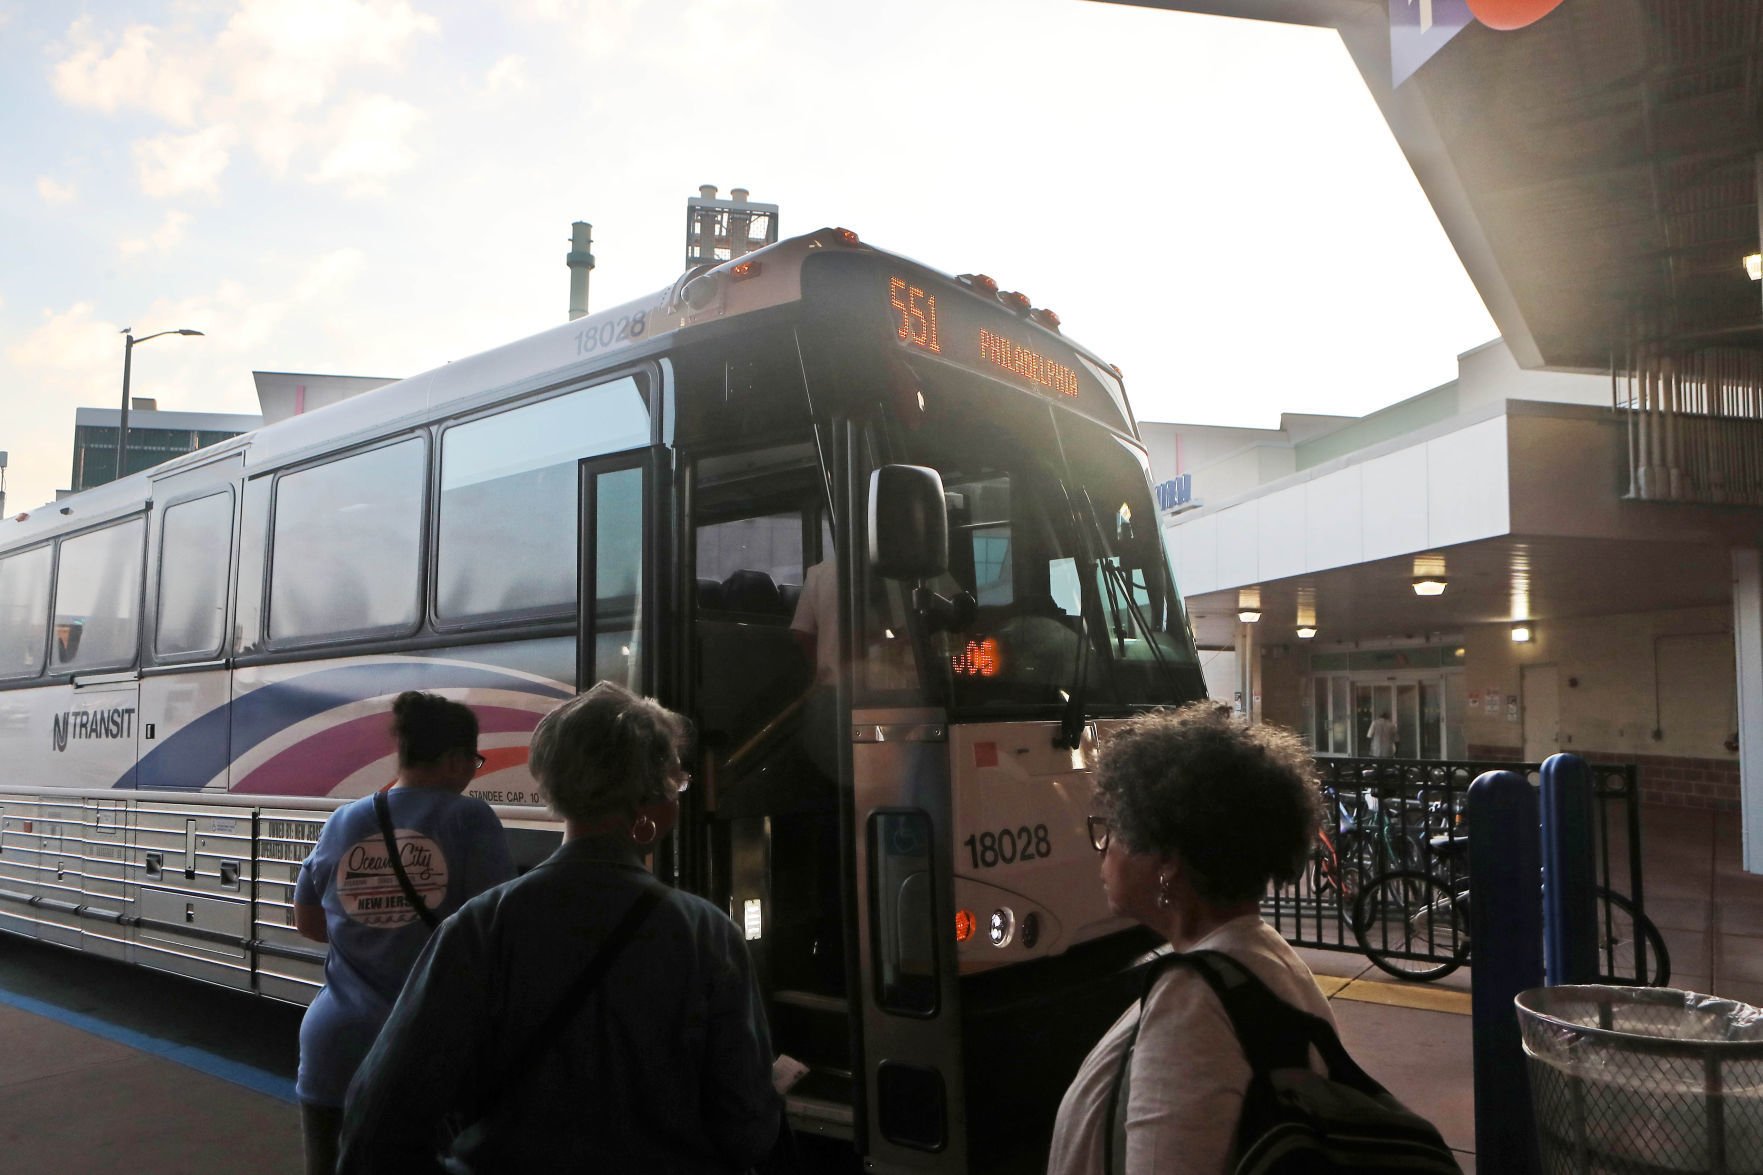 bus from philadelphia airport to atlantic city